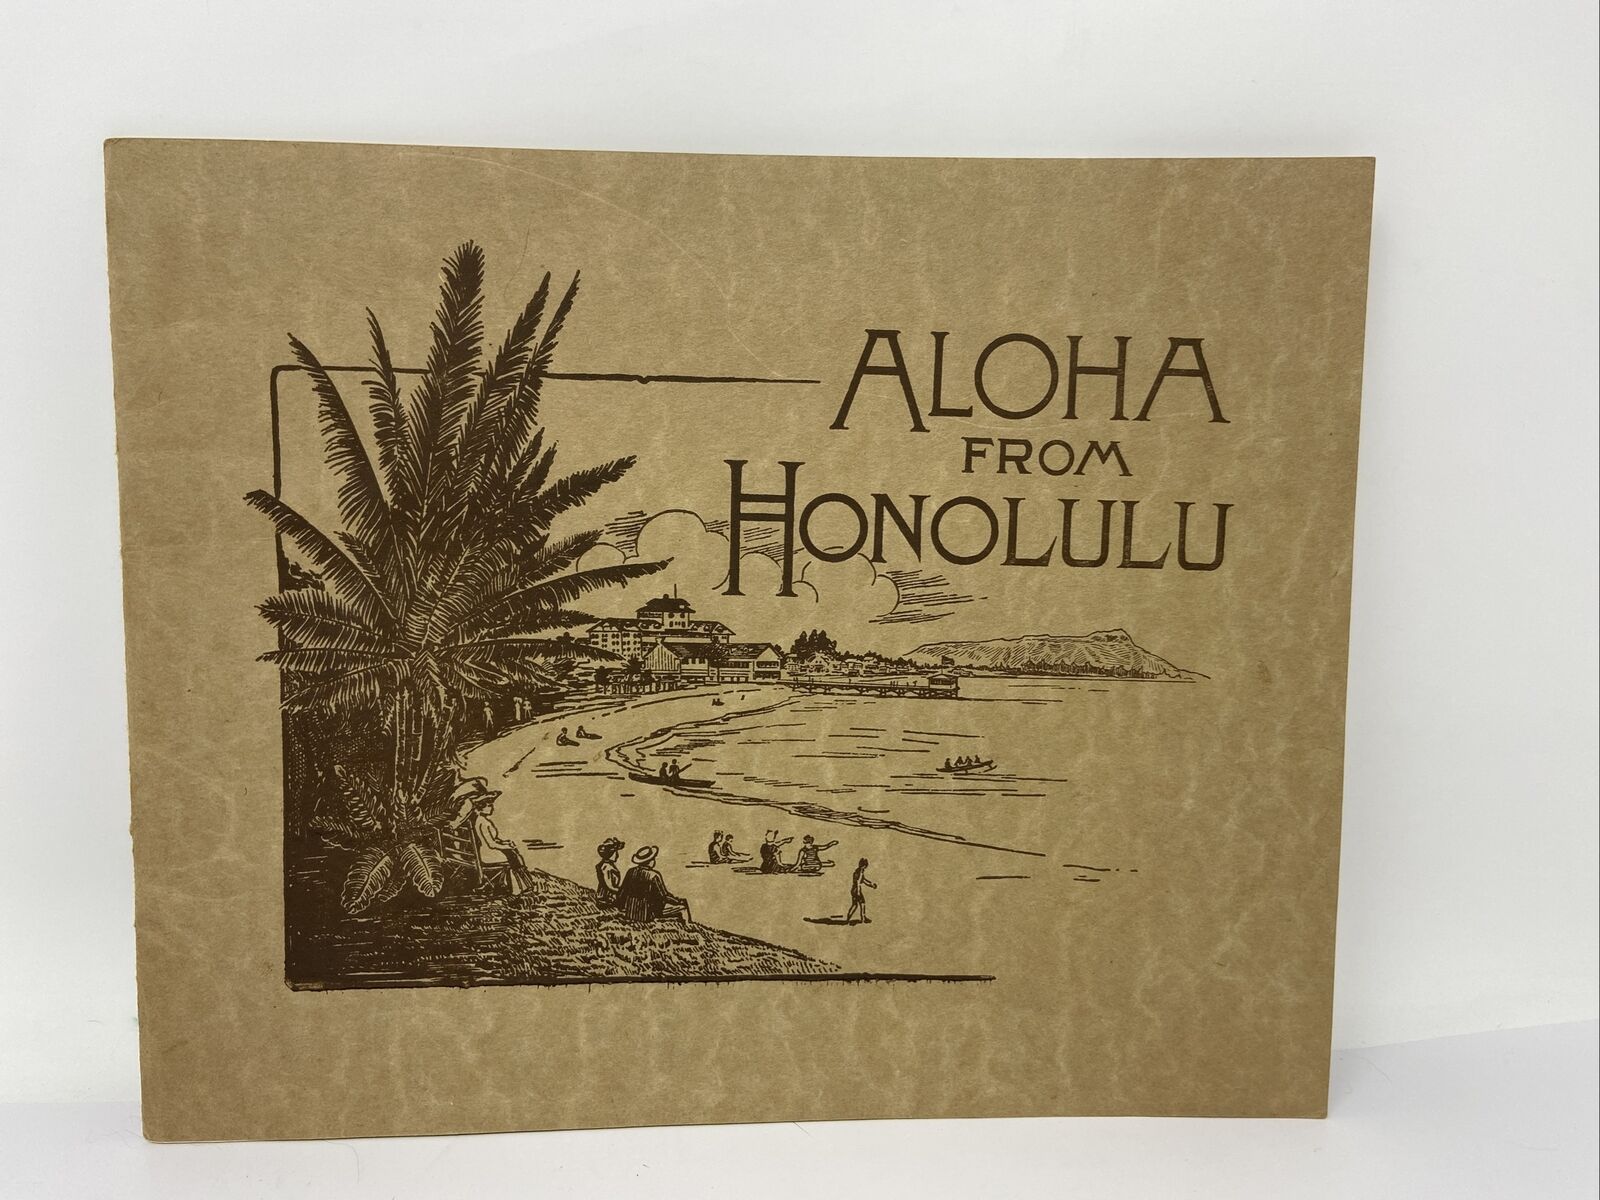 Original 1919 Aloha From Honolulu Souvenir Litho Photos Pictures Book